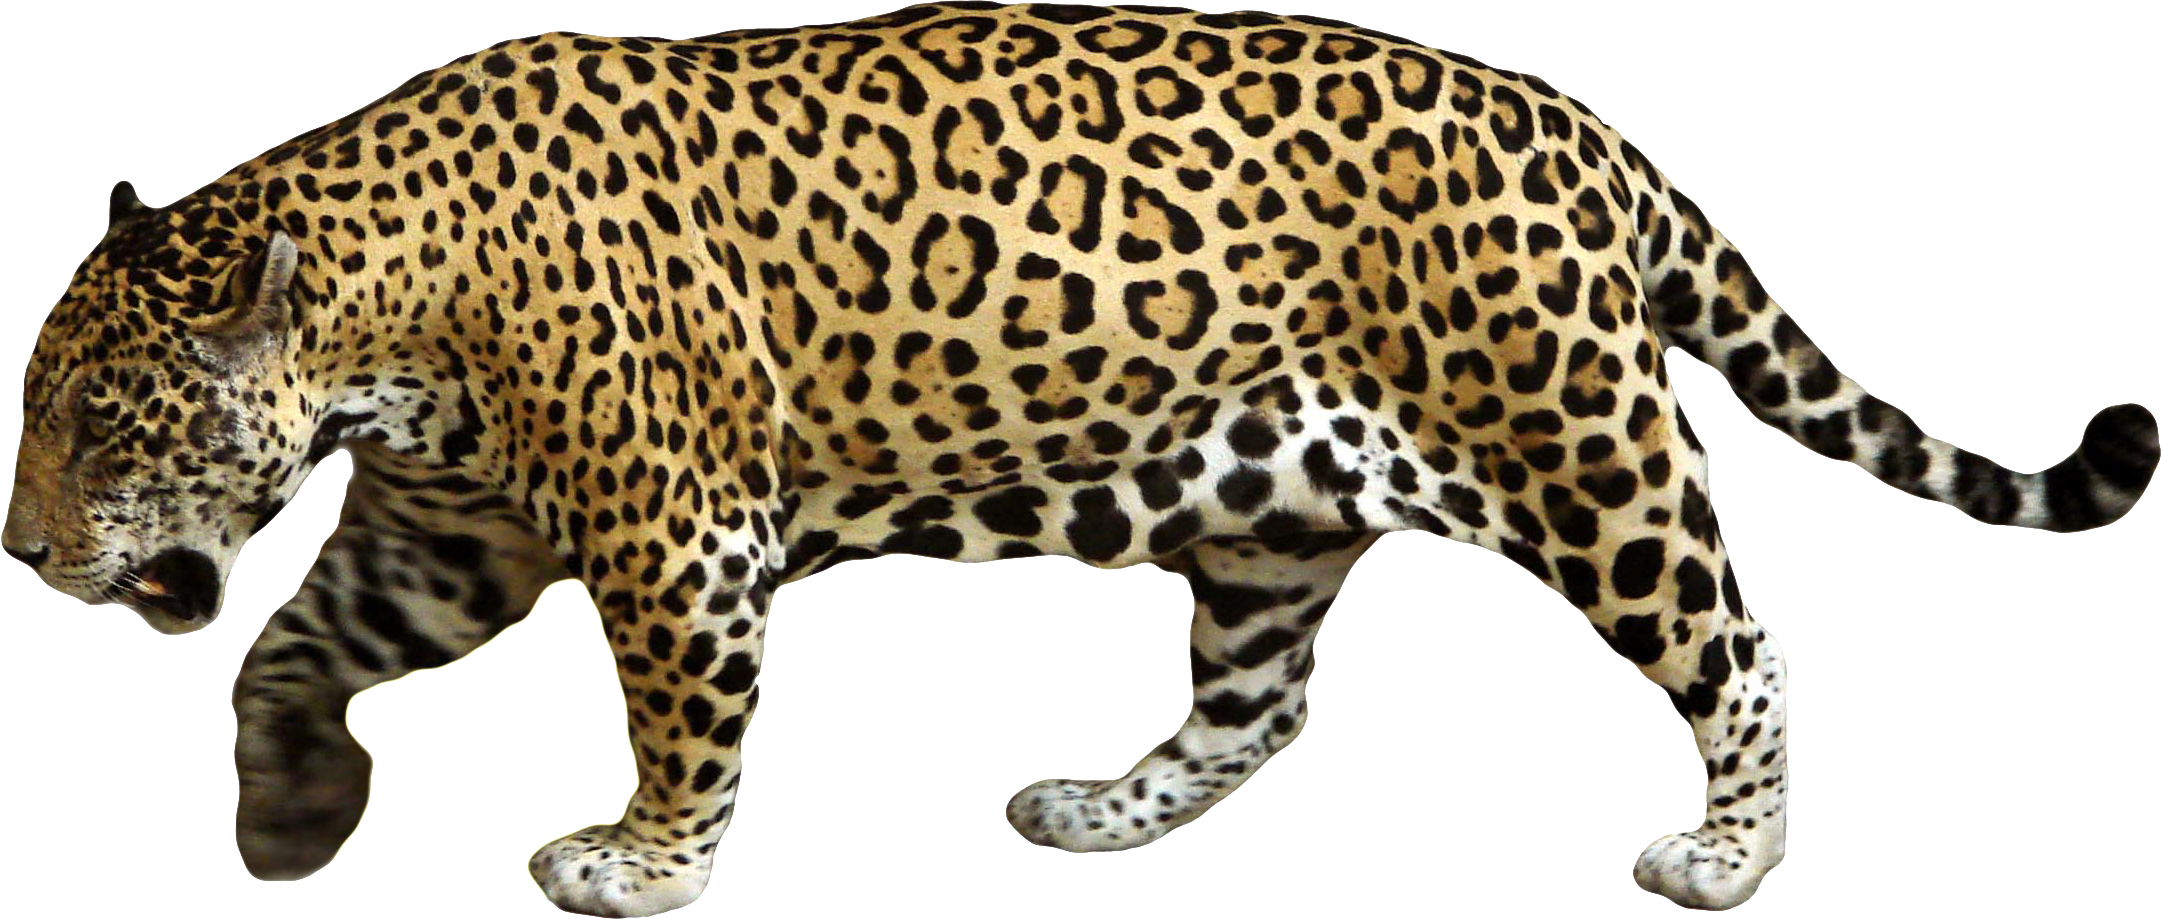 Jaguar Walking PNG Transparent Image